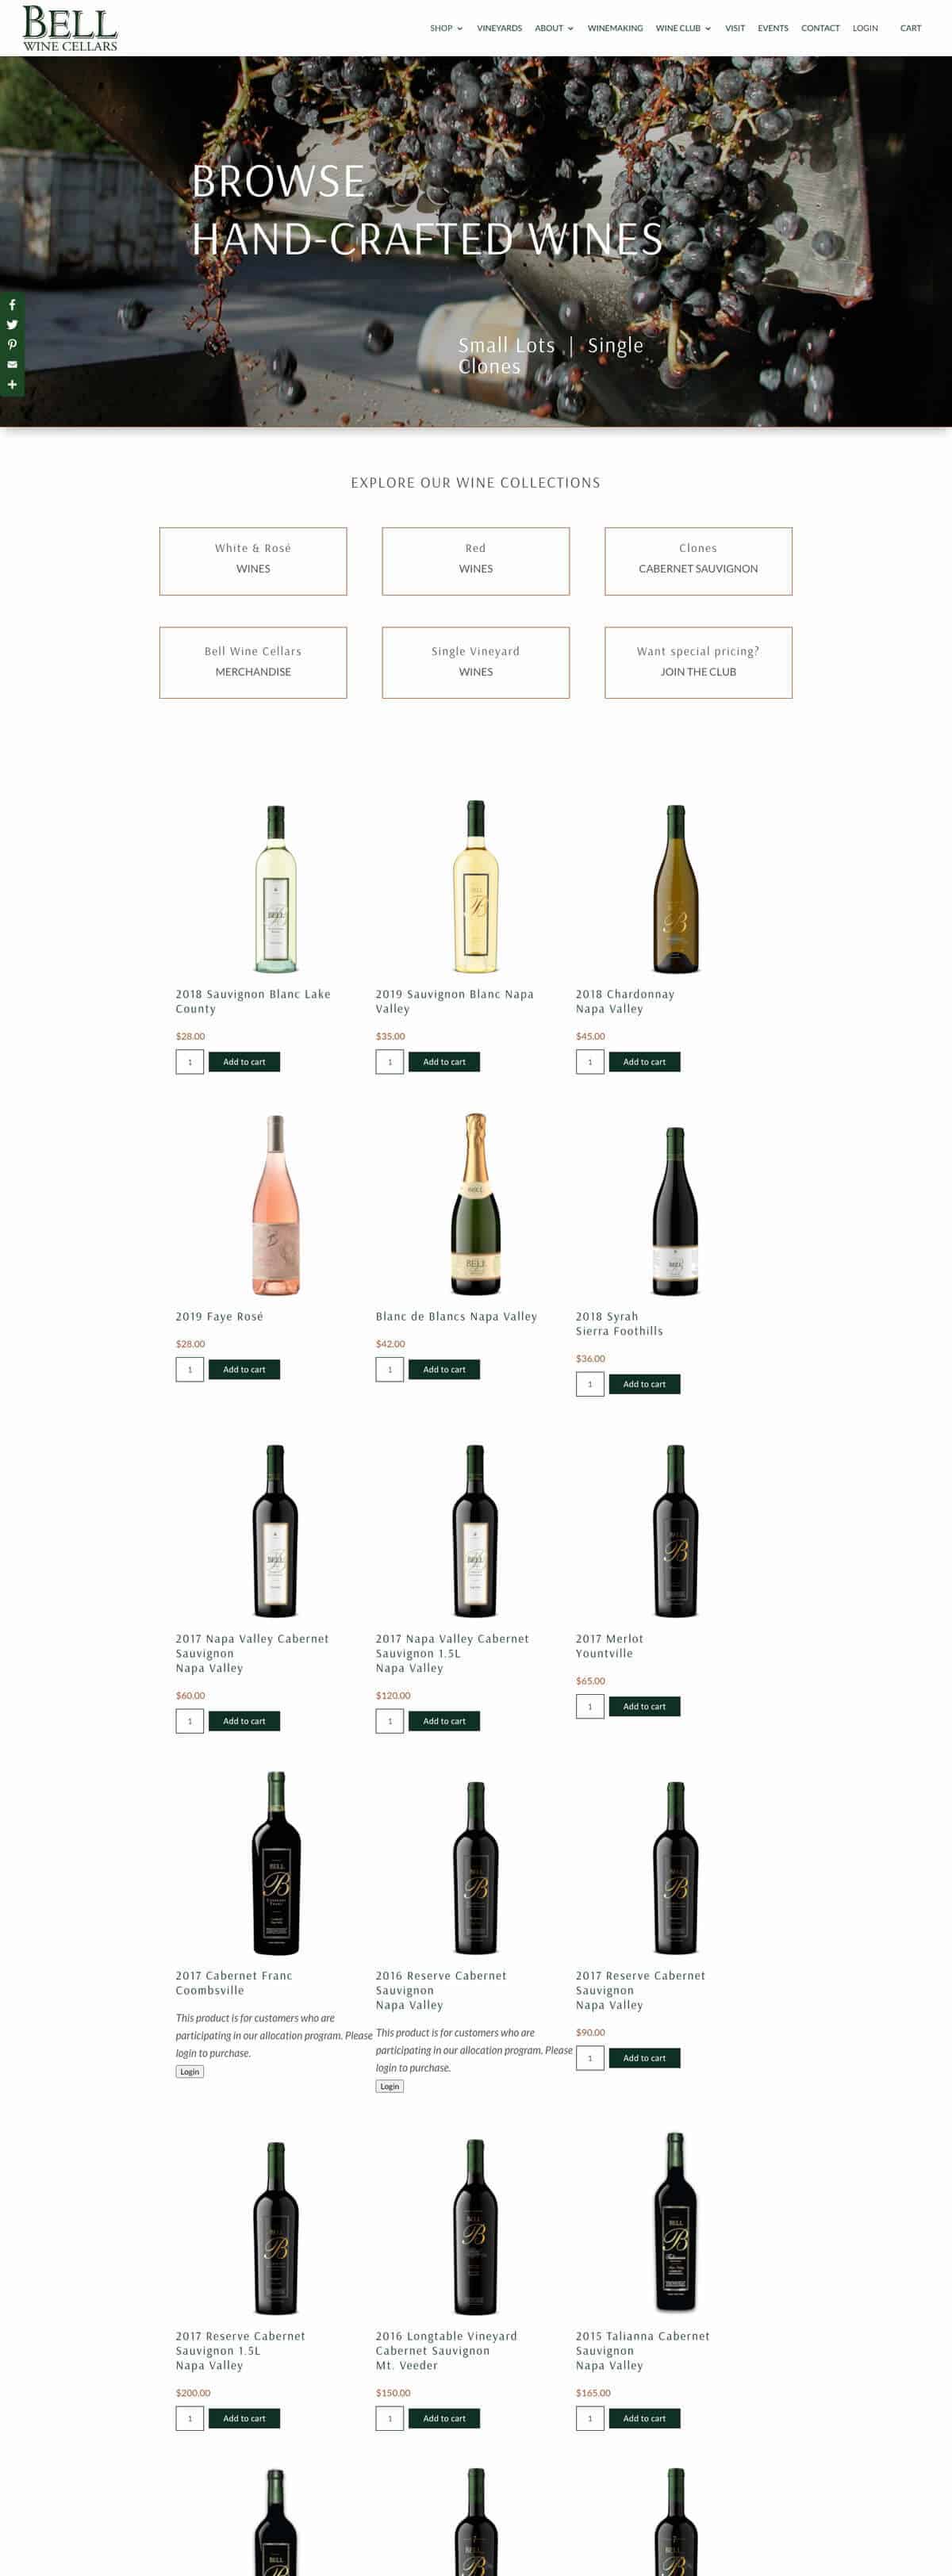 bell-wine-shop-winery-website-design-2